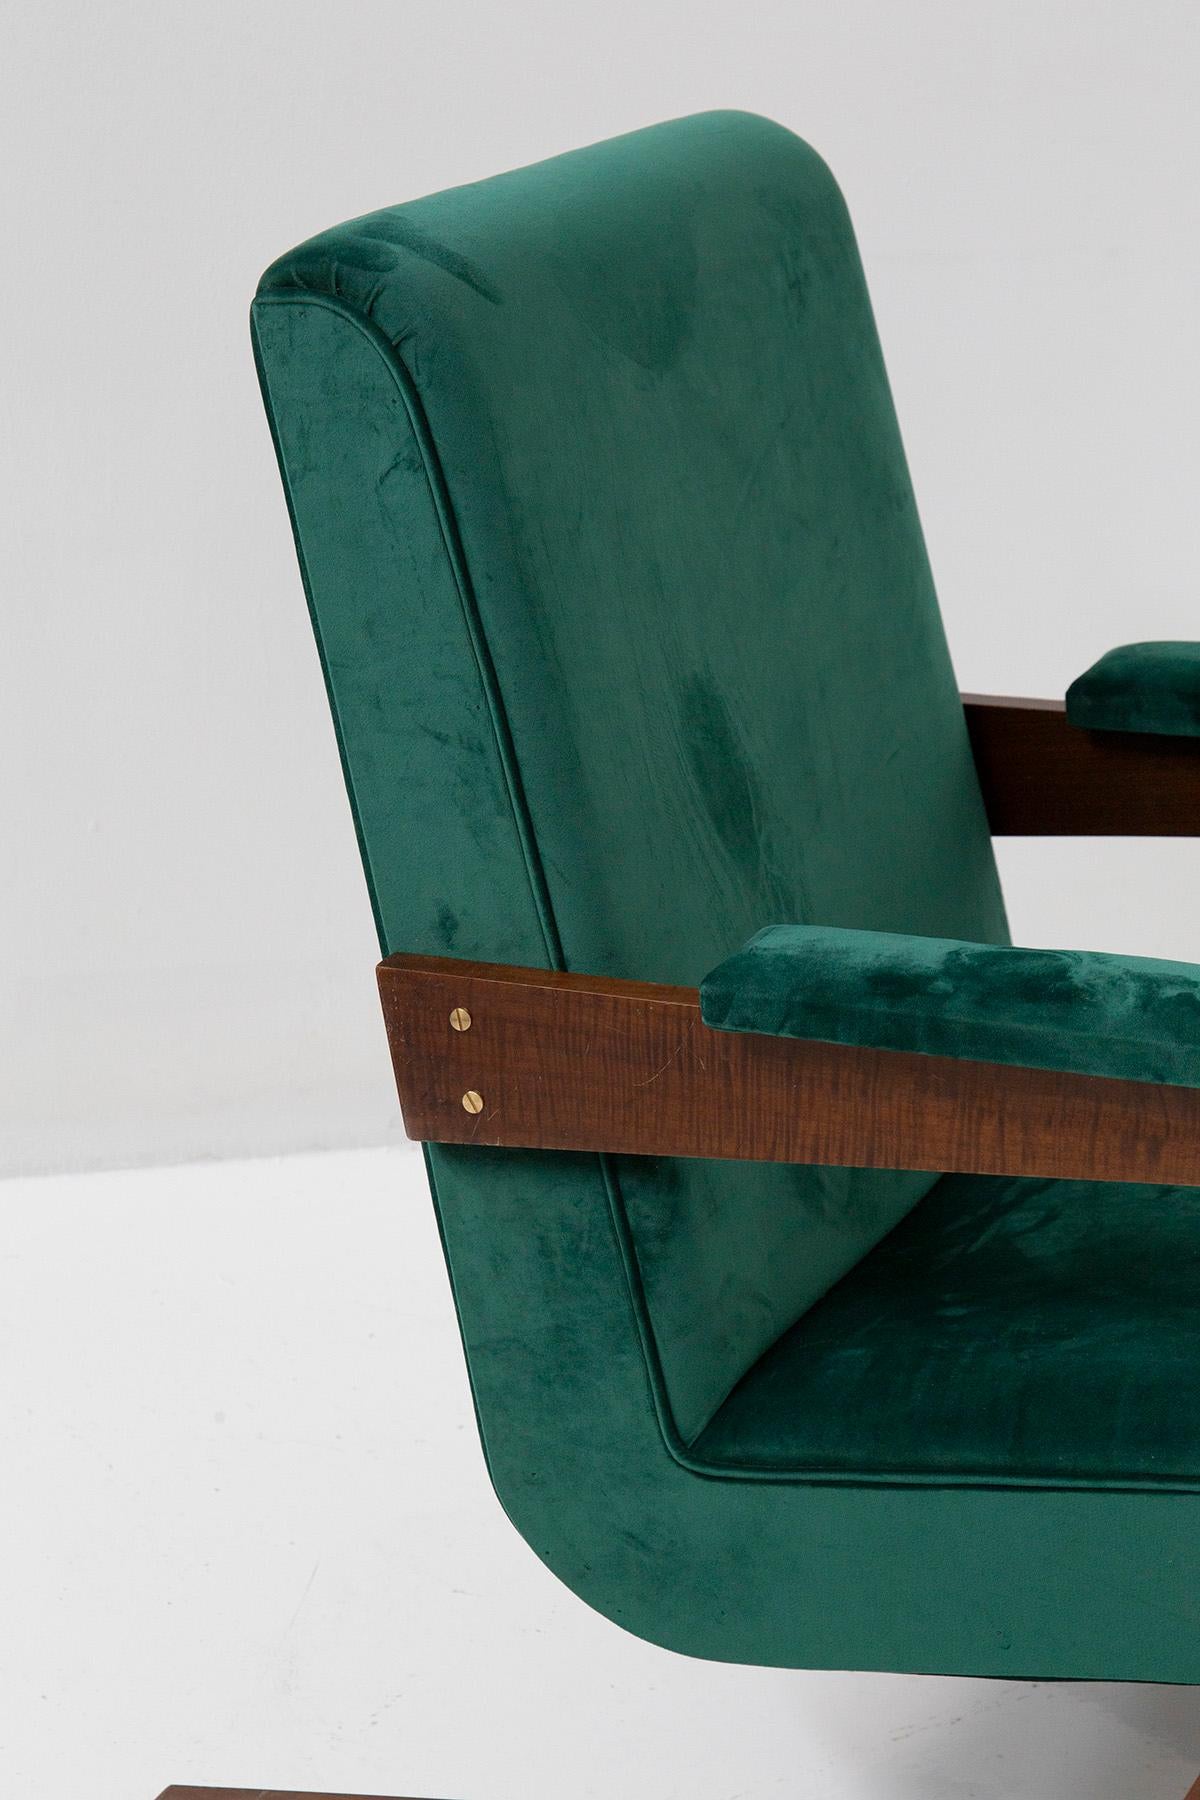 Paar brasilianische Sessel aus grünem Samt, 20. Jahrhundert (Holz) im Angebot